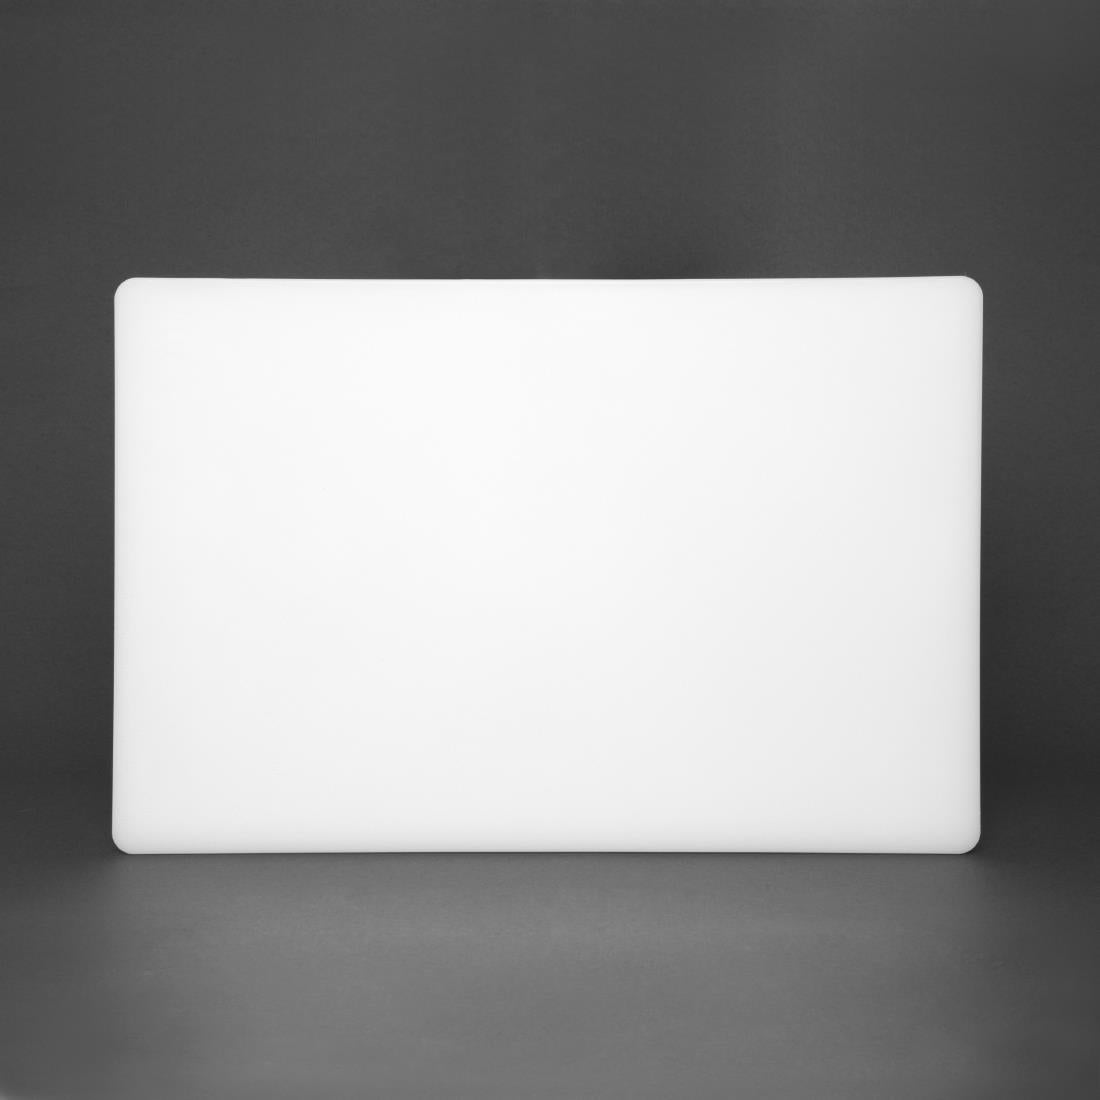 EDLP - Hygiplas Low Density Chopping Board White - 300x450x20mm